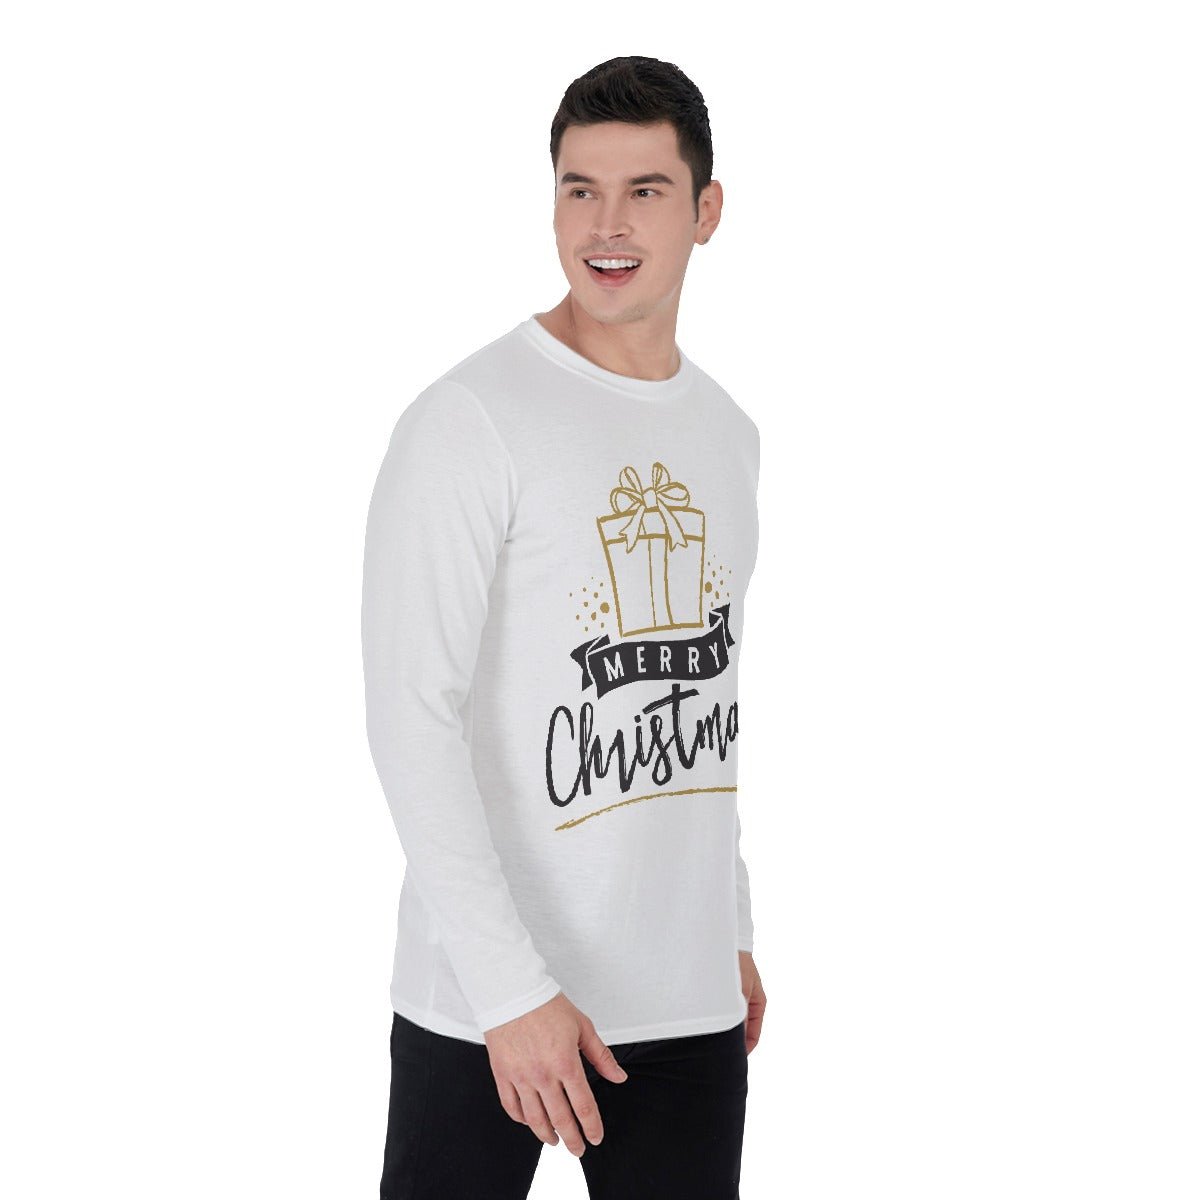 Men's Long Sleeve Christmas T-Shirt - Merry Christmas - Gold Present - Festive Style